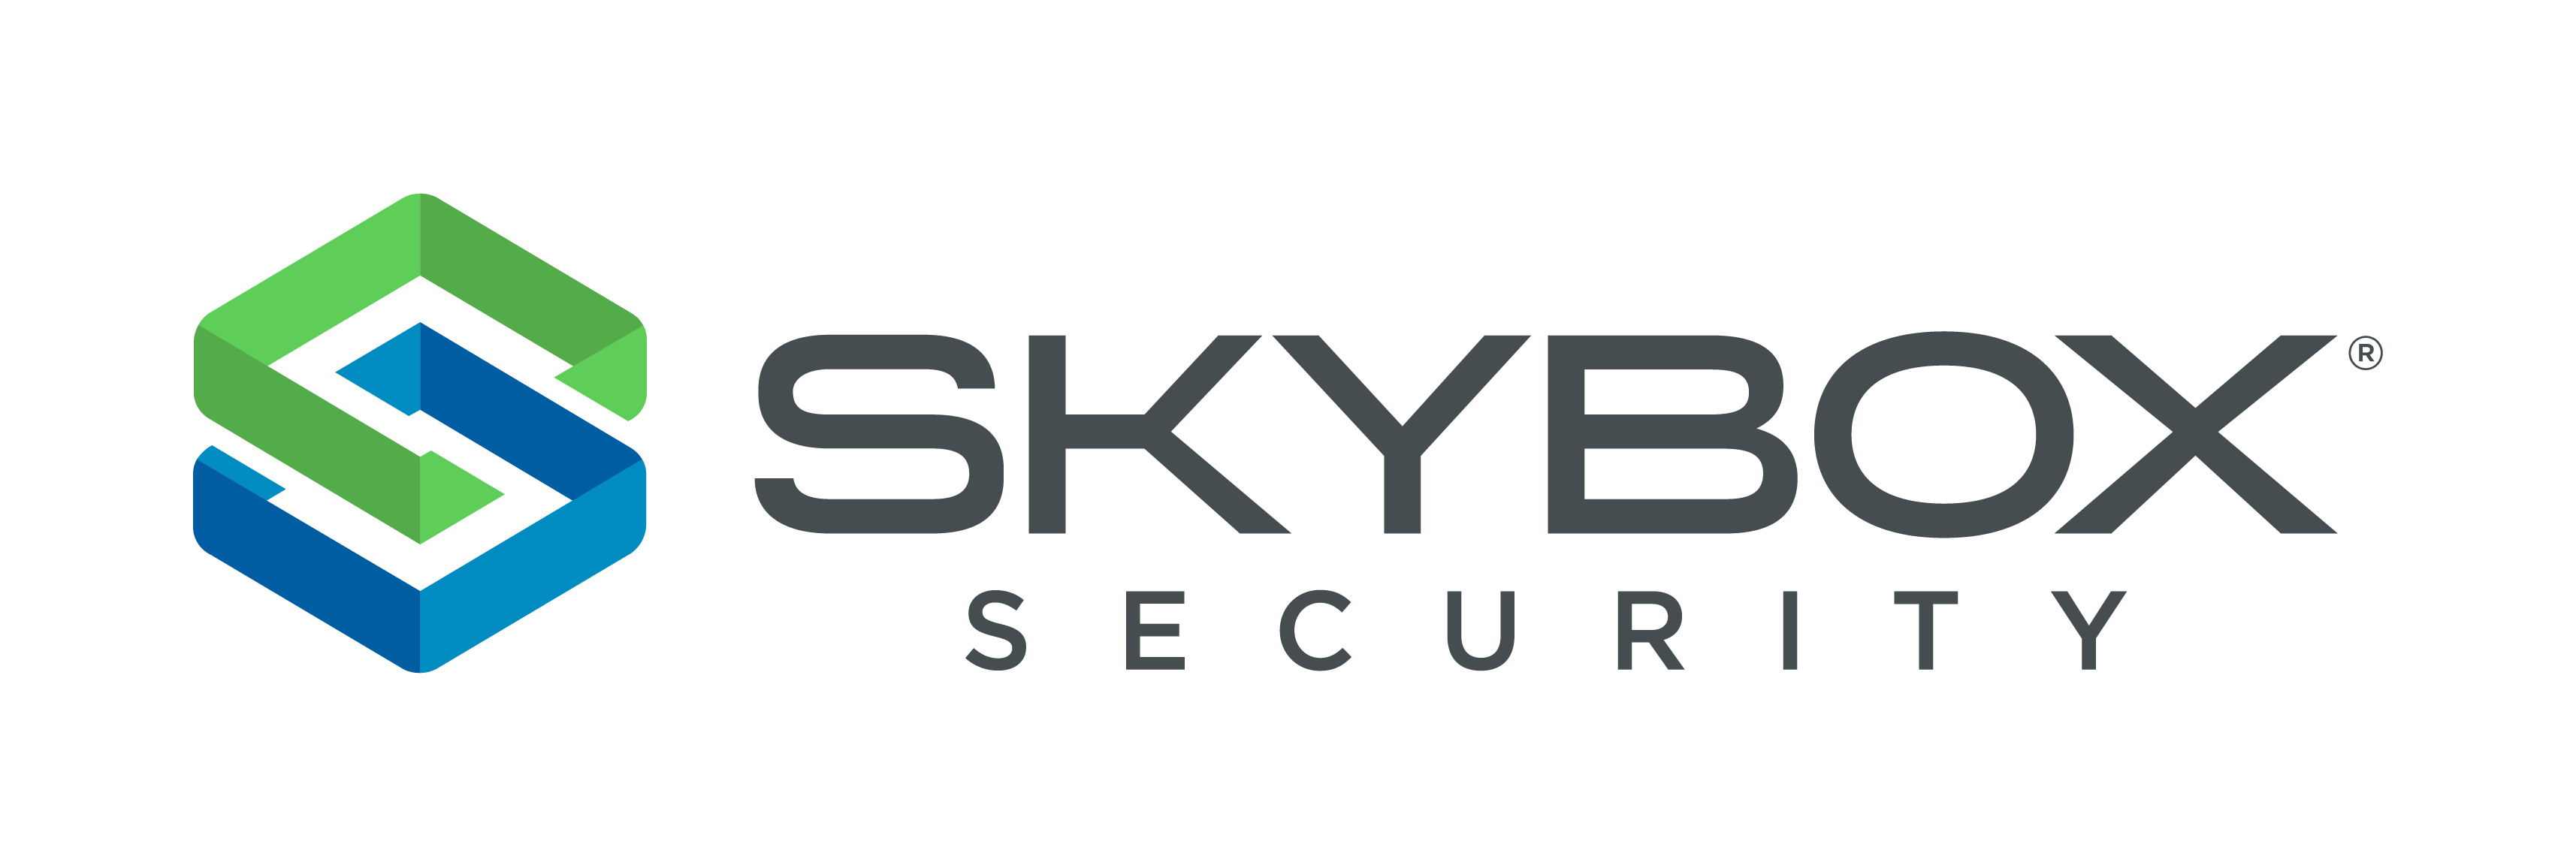 Skybox Security Rais